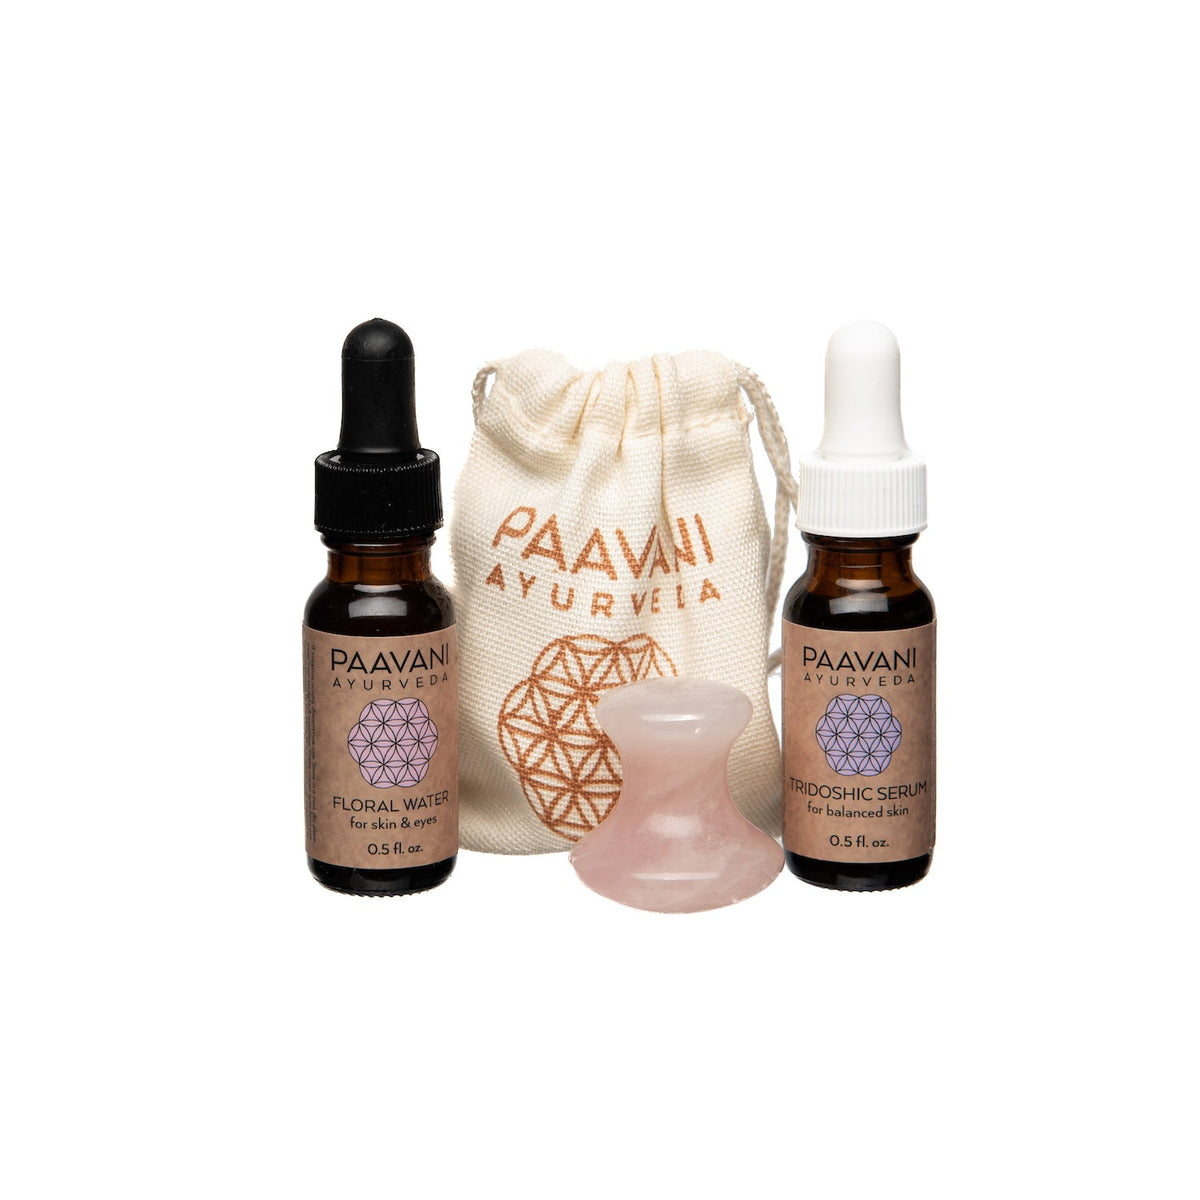 * Paavani Ayurveda - The Radiant Skin Ritual - Rose Quartz Facial Tool including Facial Serum and Floral Water, Bundle-1